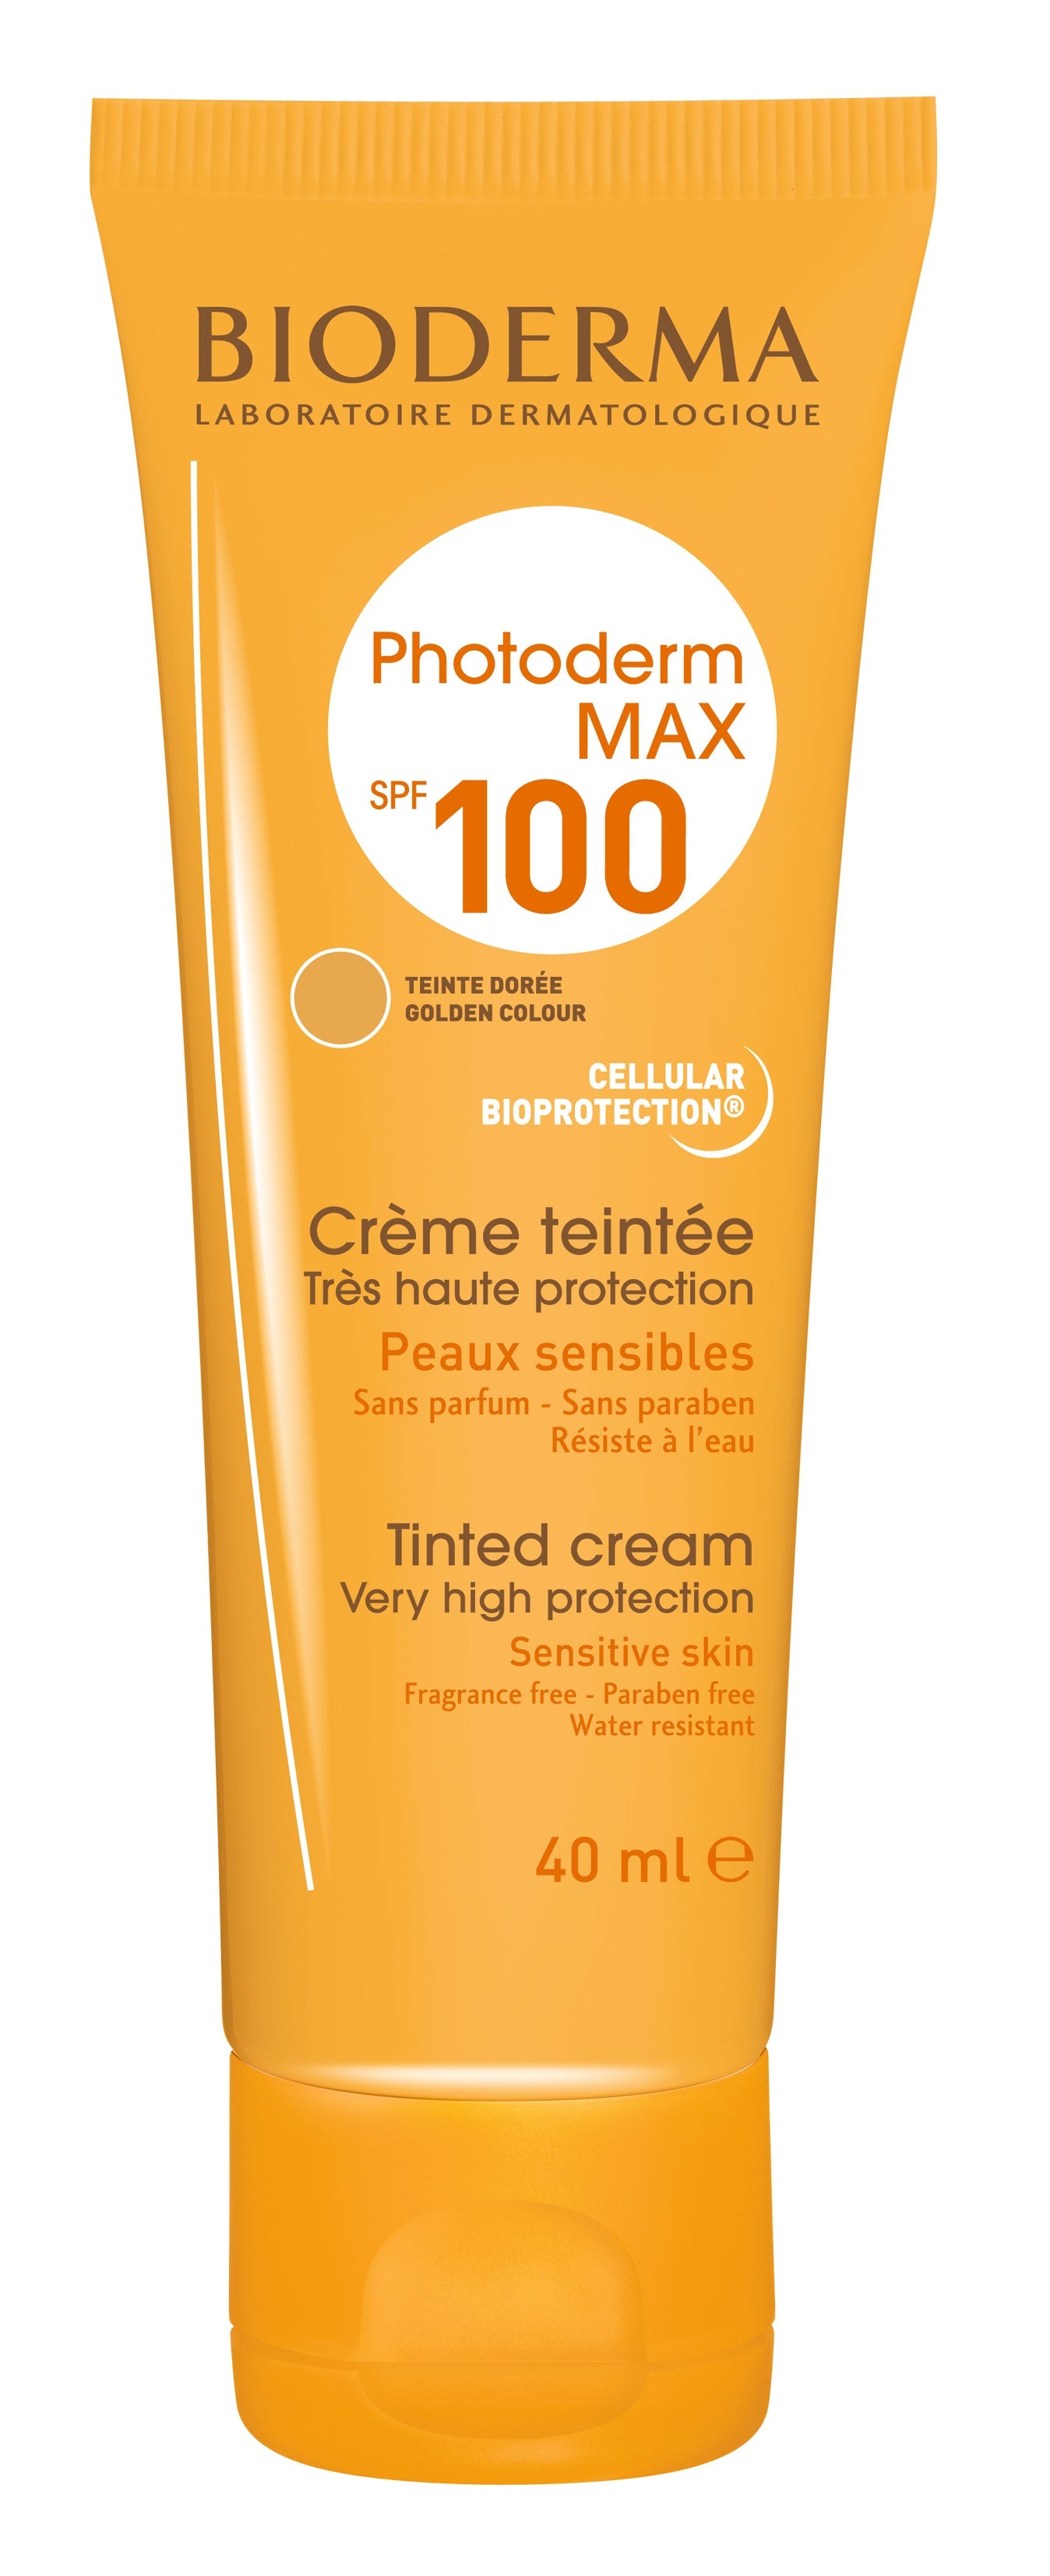 Bioderma Photoderm MAX Dark Tint Cream SPF100 for Sensitive Skin 40ml